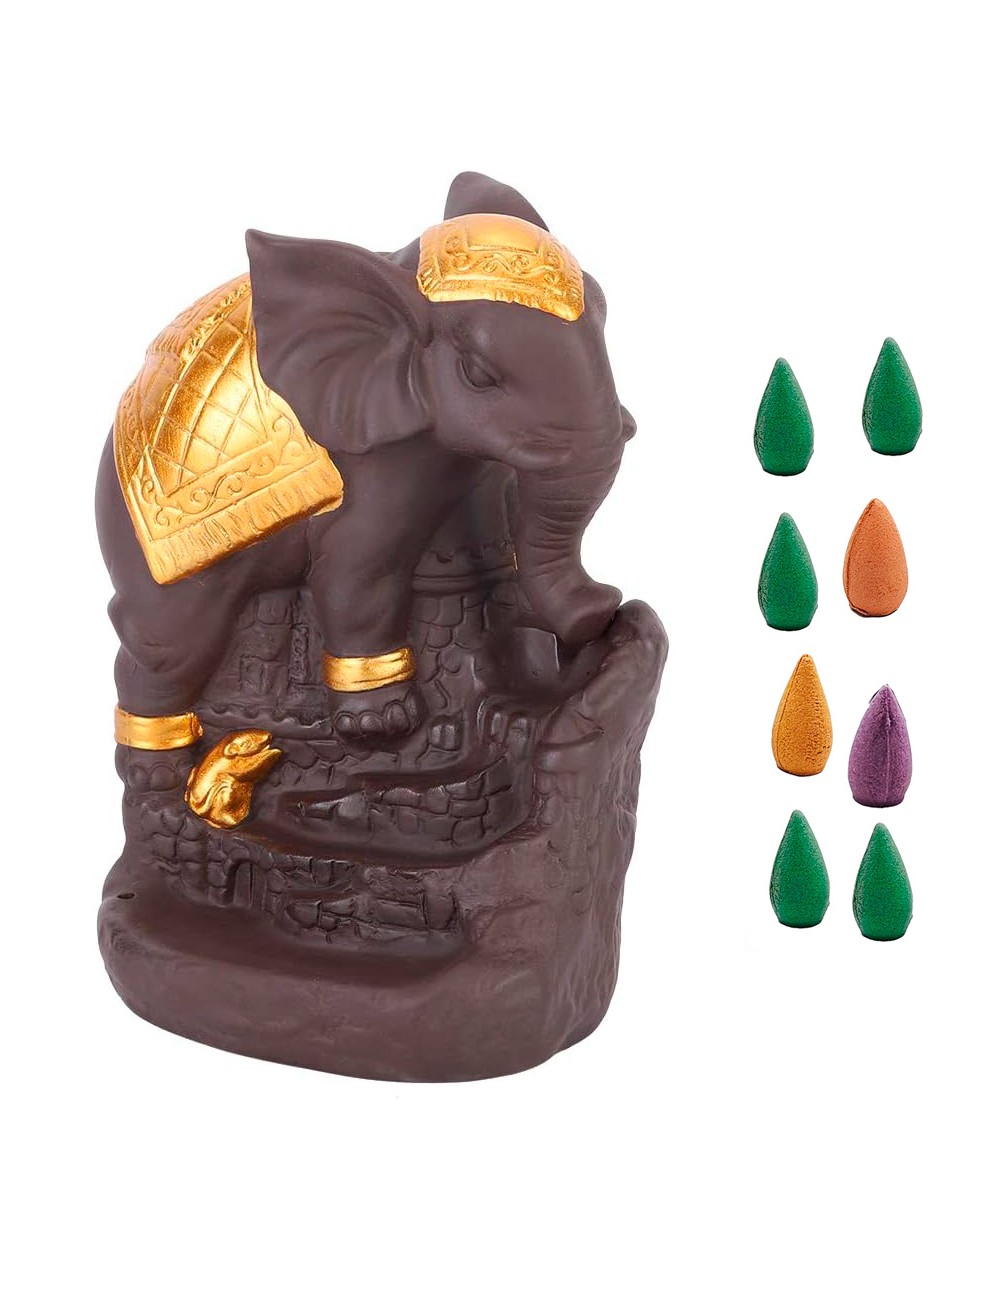 Elefante Ganesha Incienso 0336 119,900.00